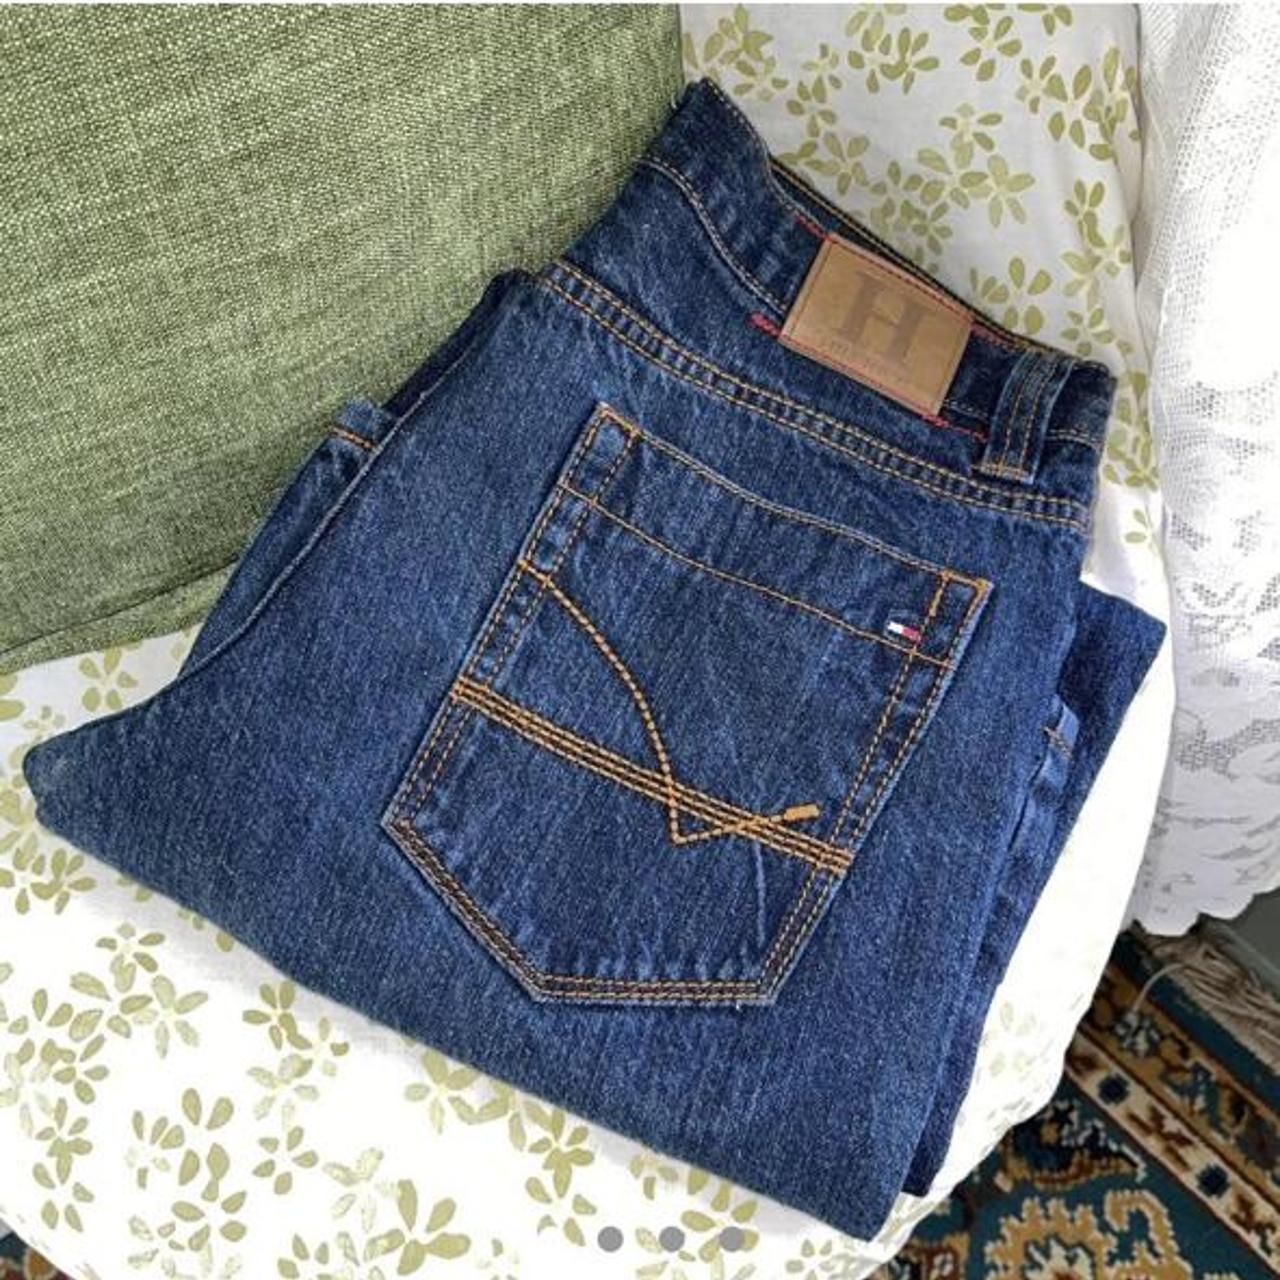 Product Image 1 - Vintage Tommy Hilfiger jeans!
- great